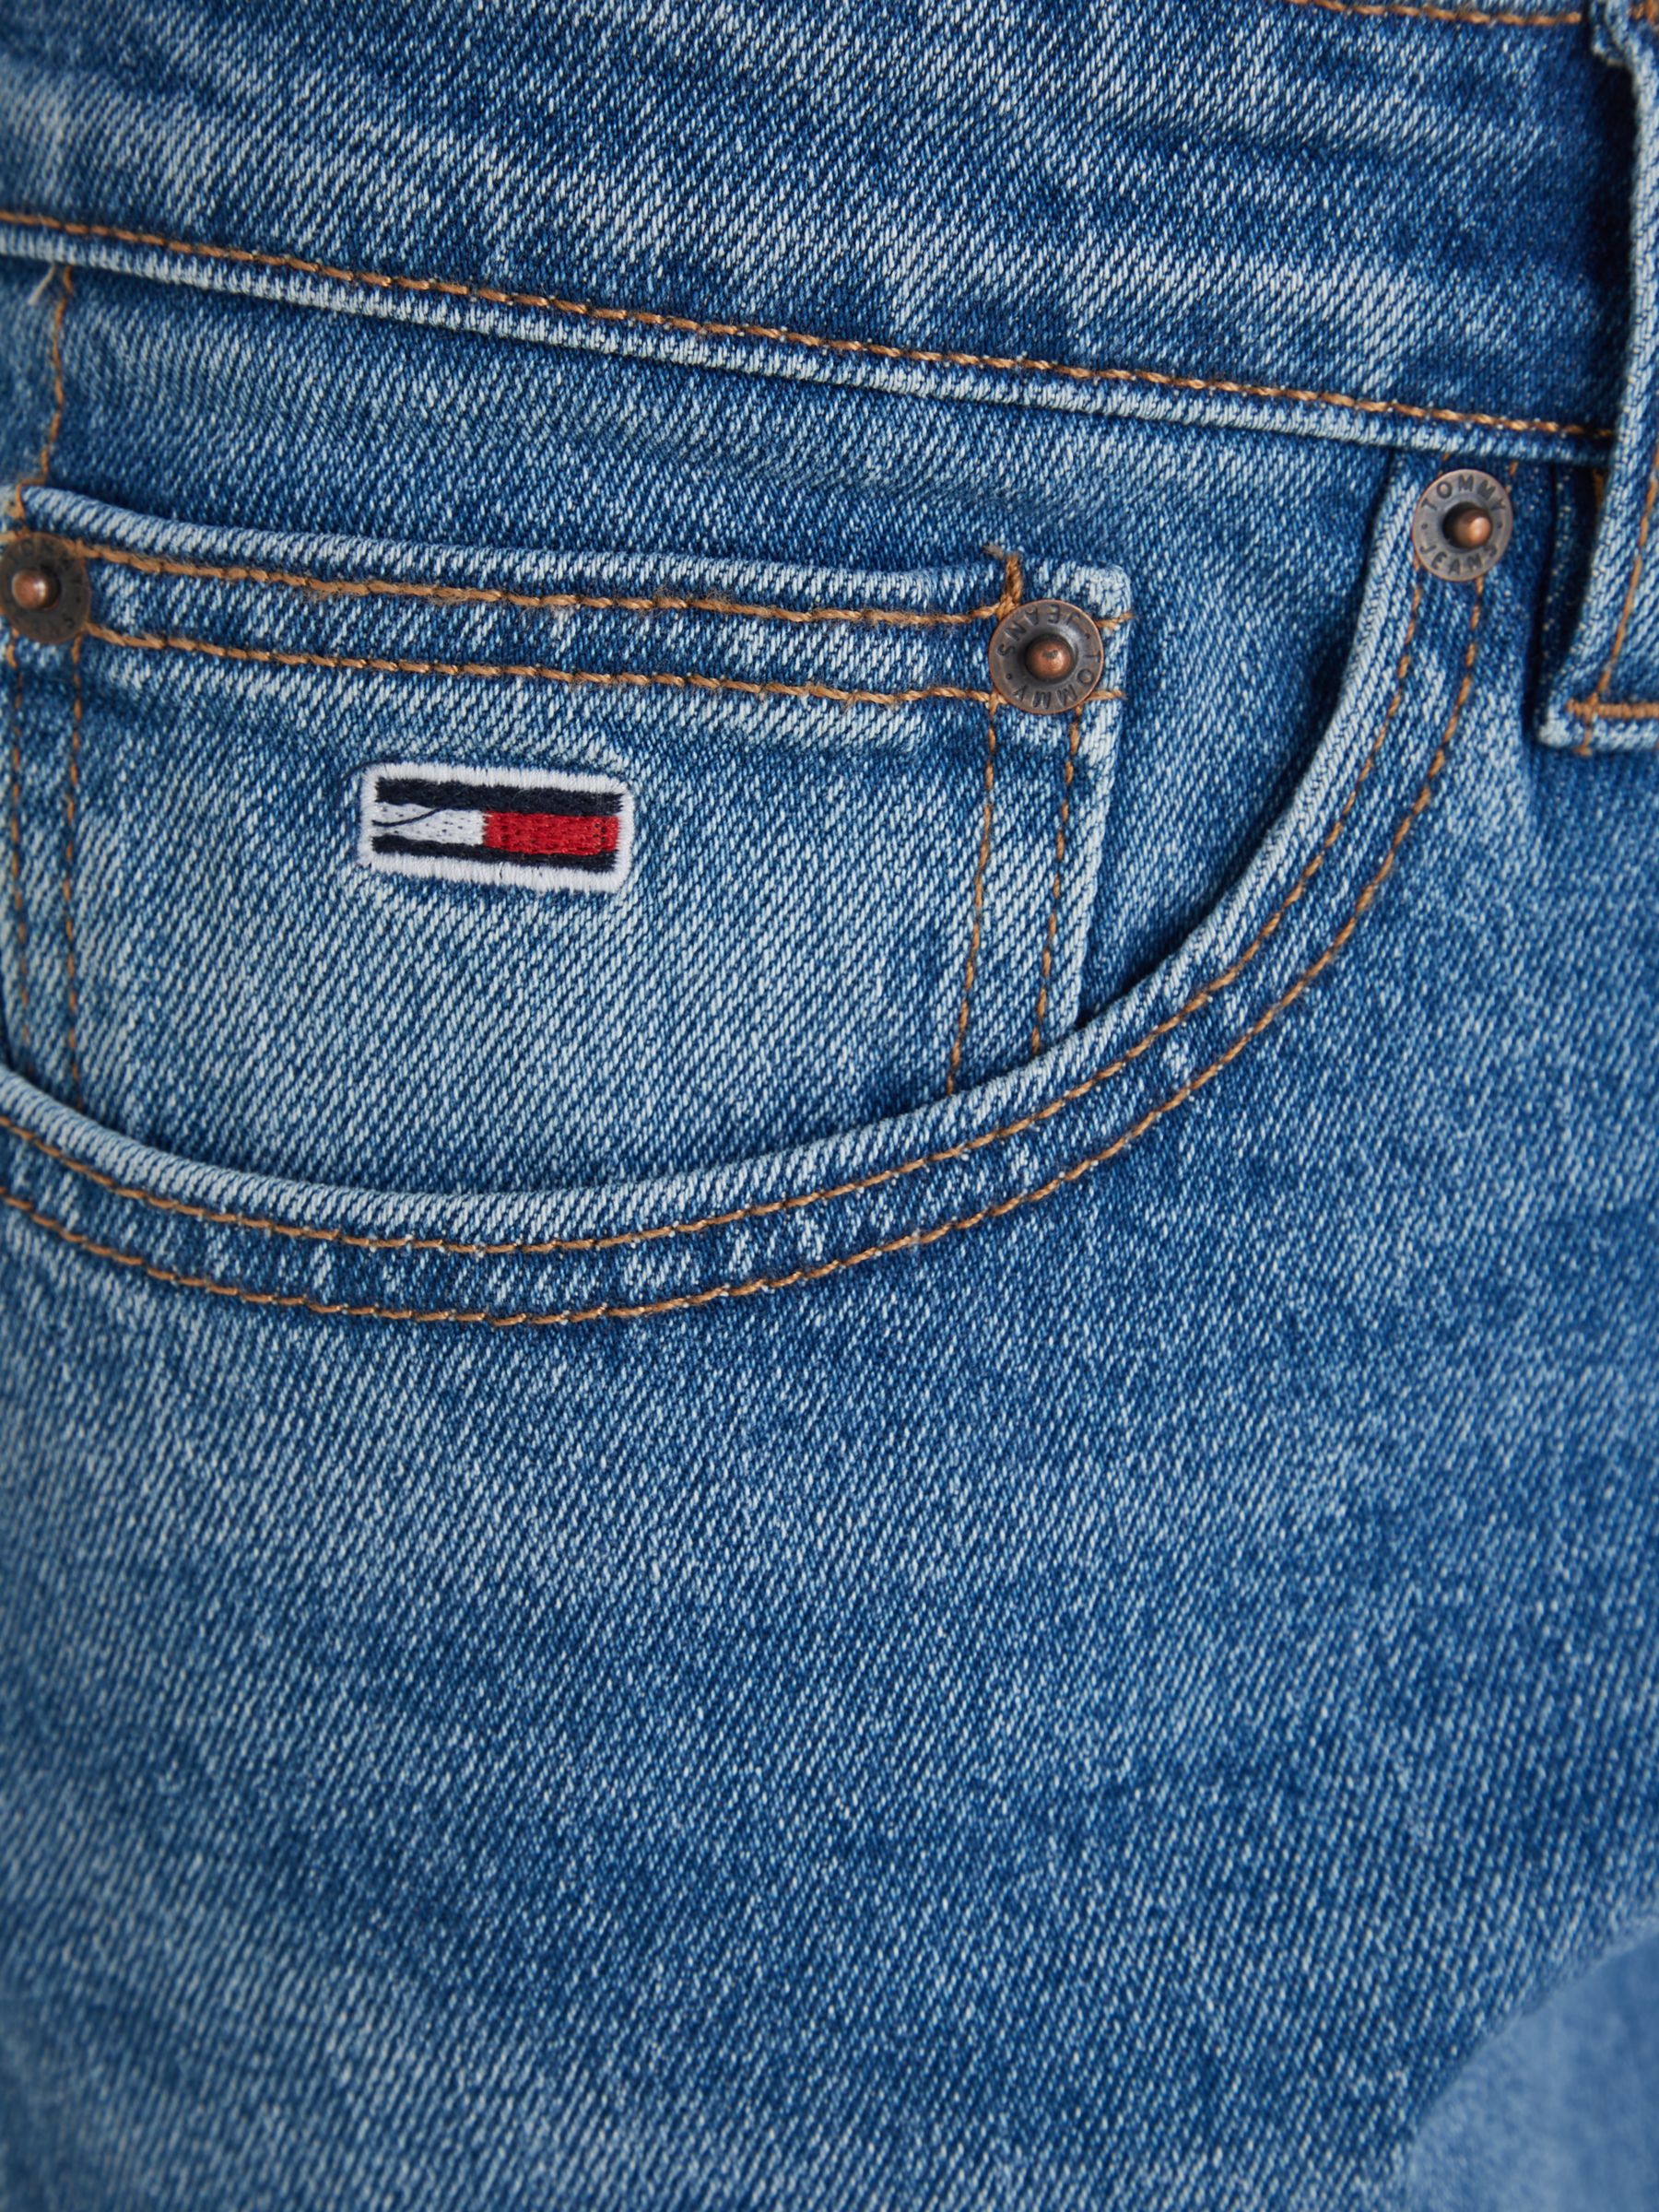 Tommy Jeans Scanton Denim Shorts, Medium Blue, 30R